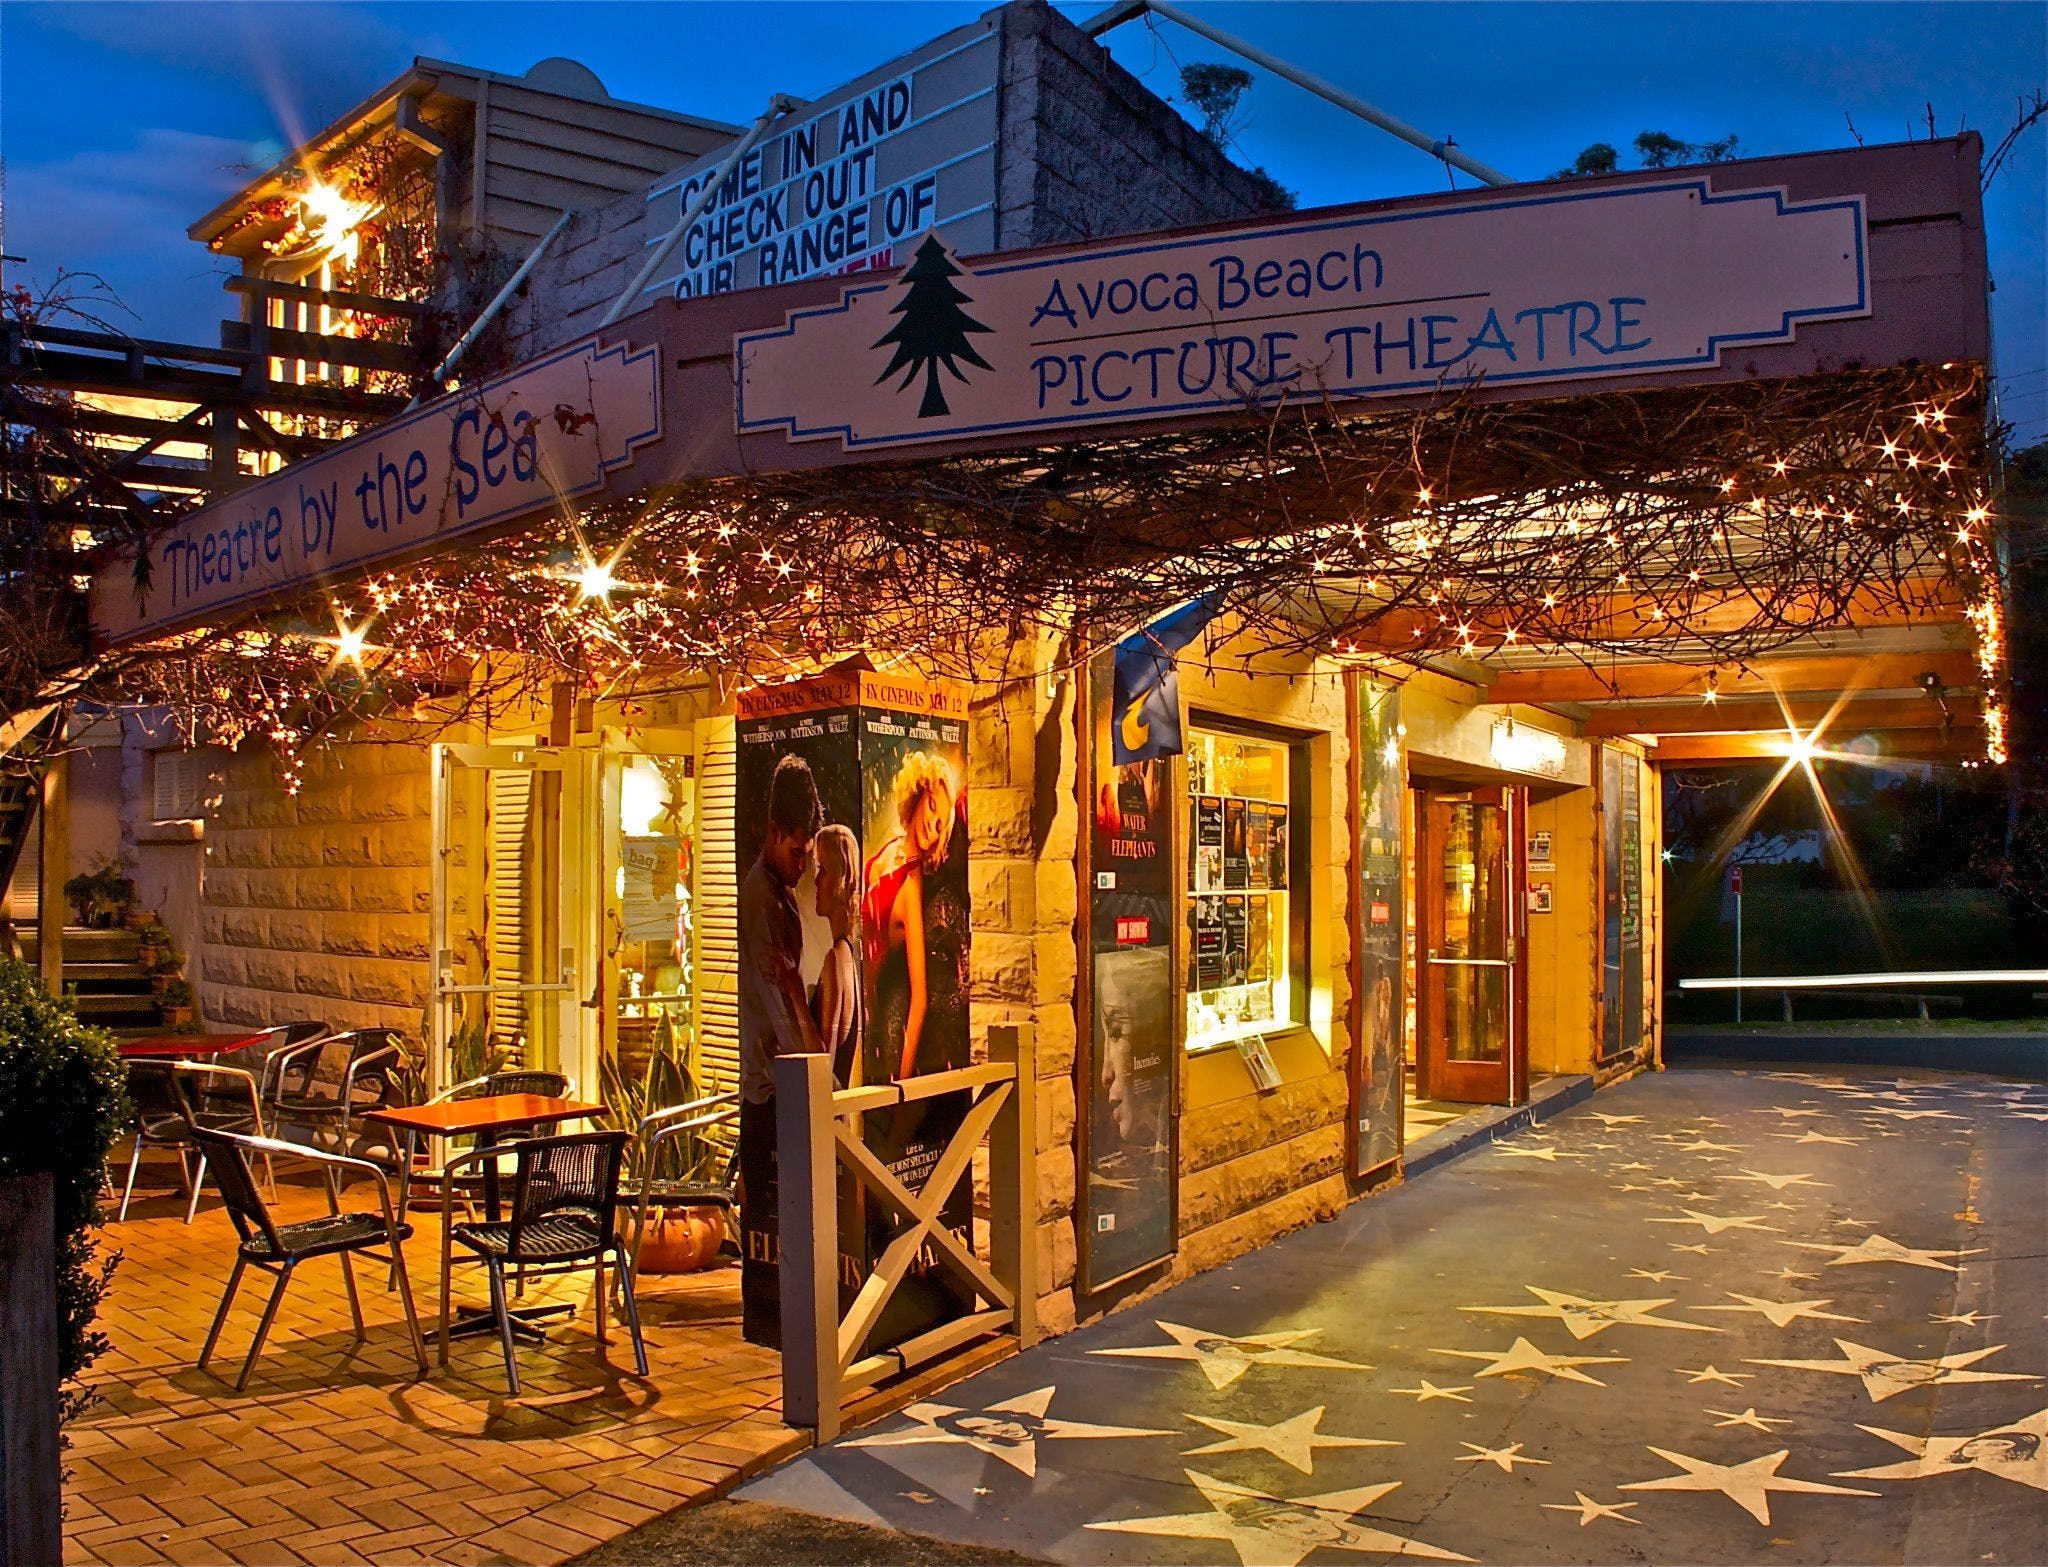 Avoca Beach Picture Theatre - Find Attractions